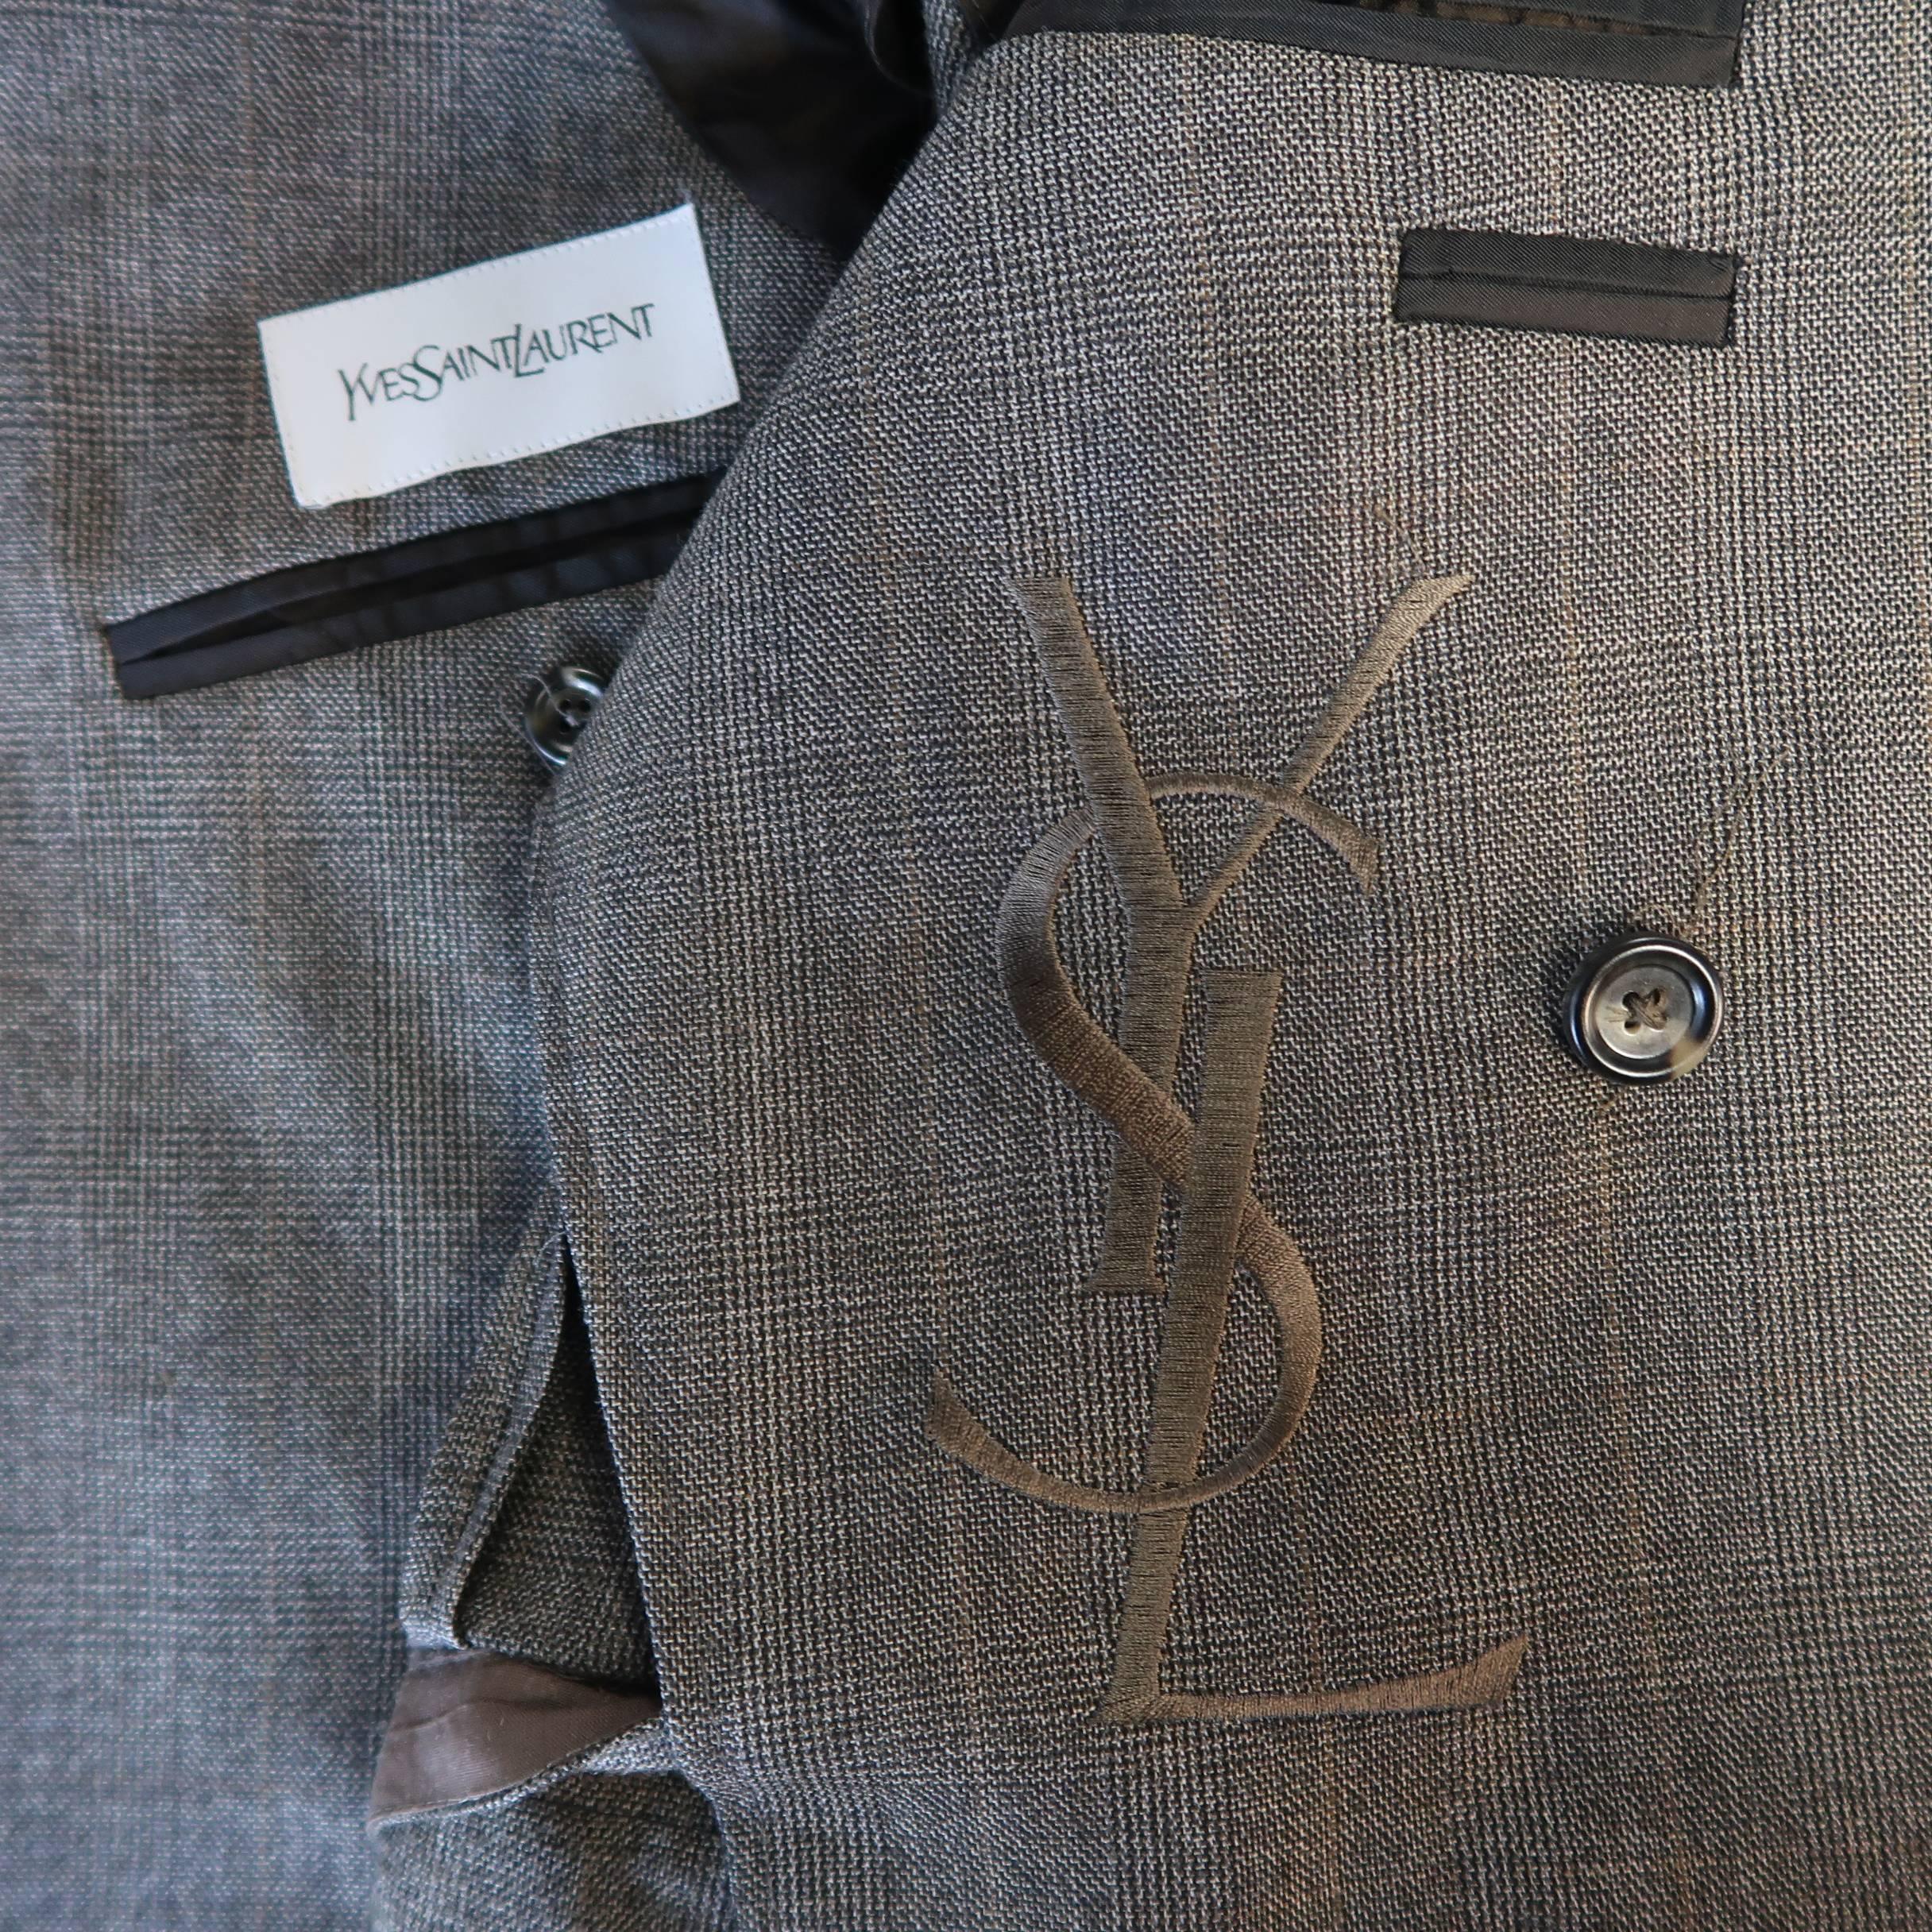 Yves Saint Laurent by Tom Ford Men's Taupe Glenplaid Wool Peak Lapel Suit 4